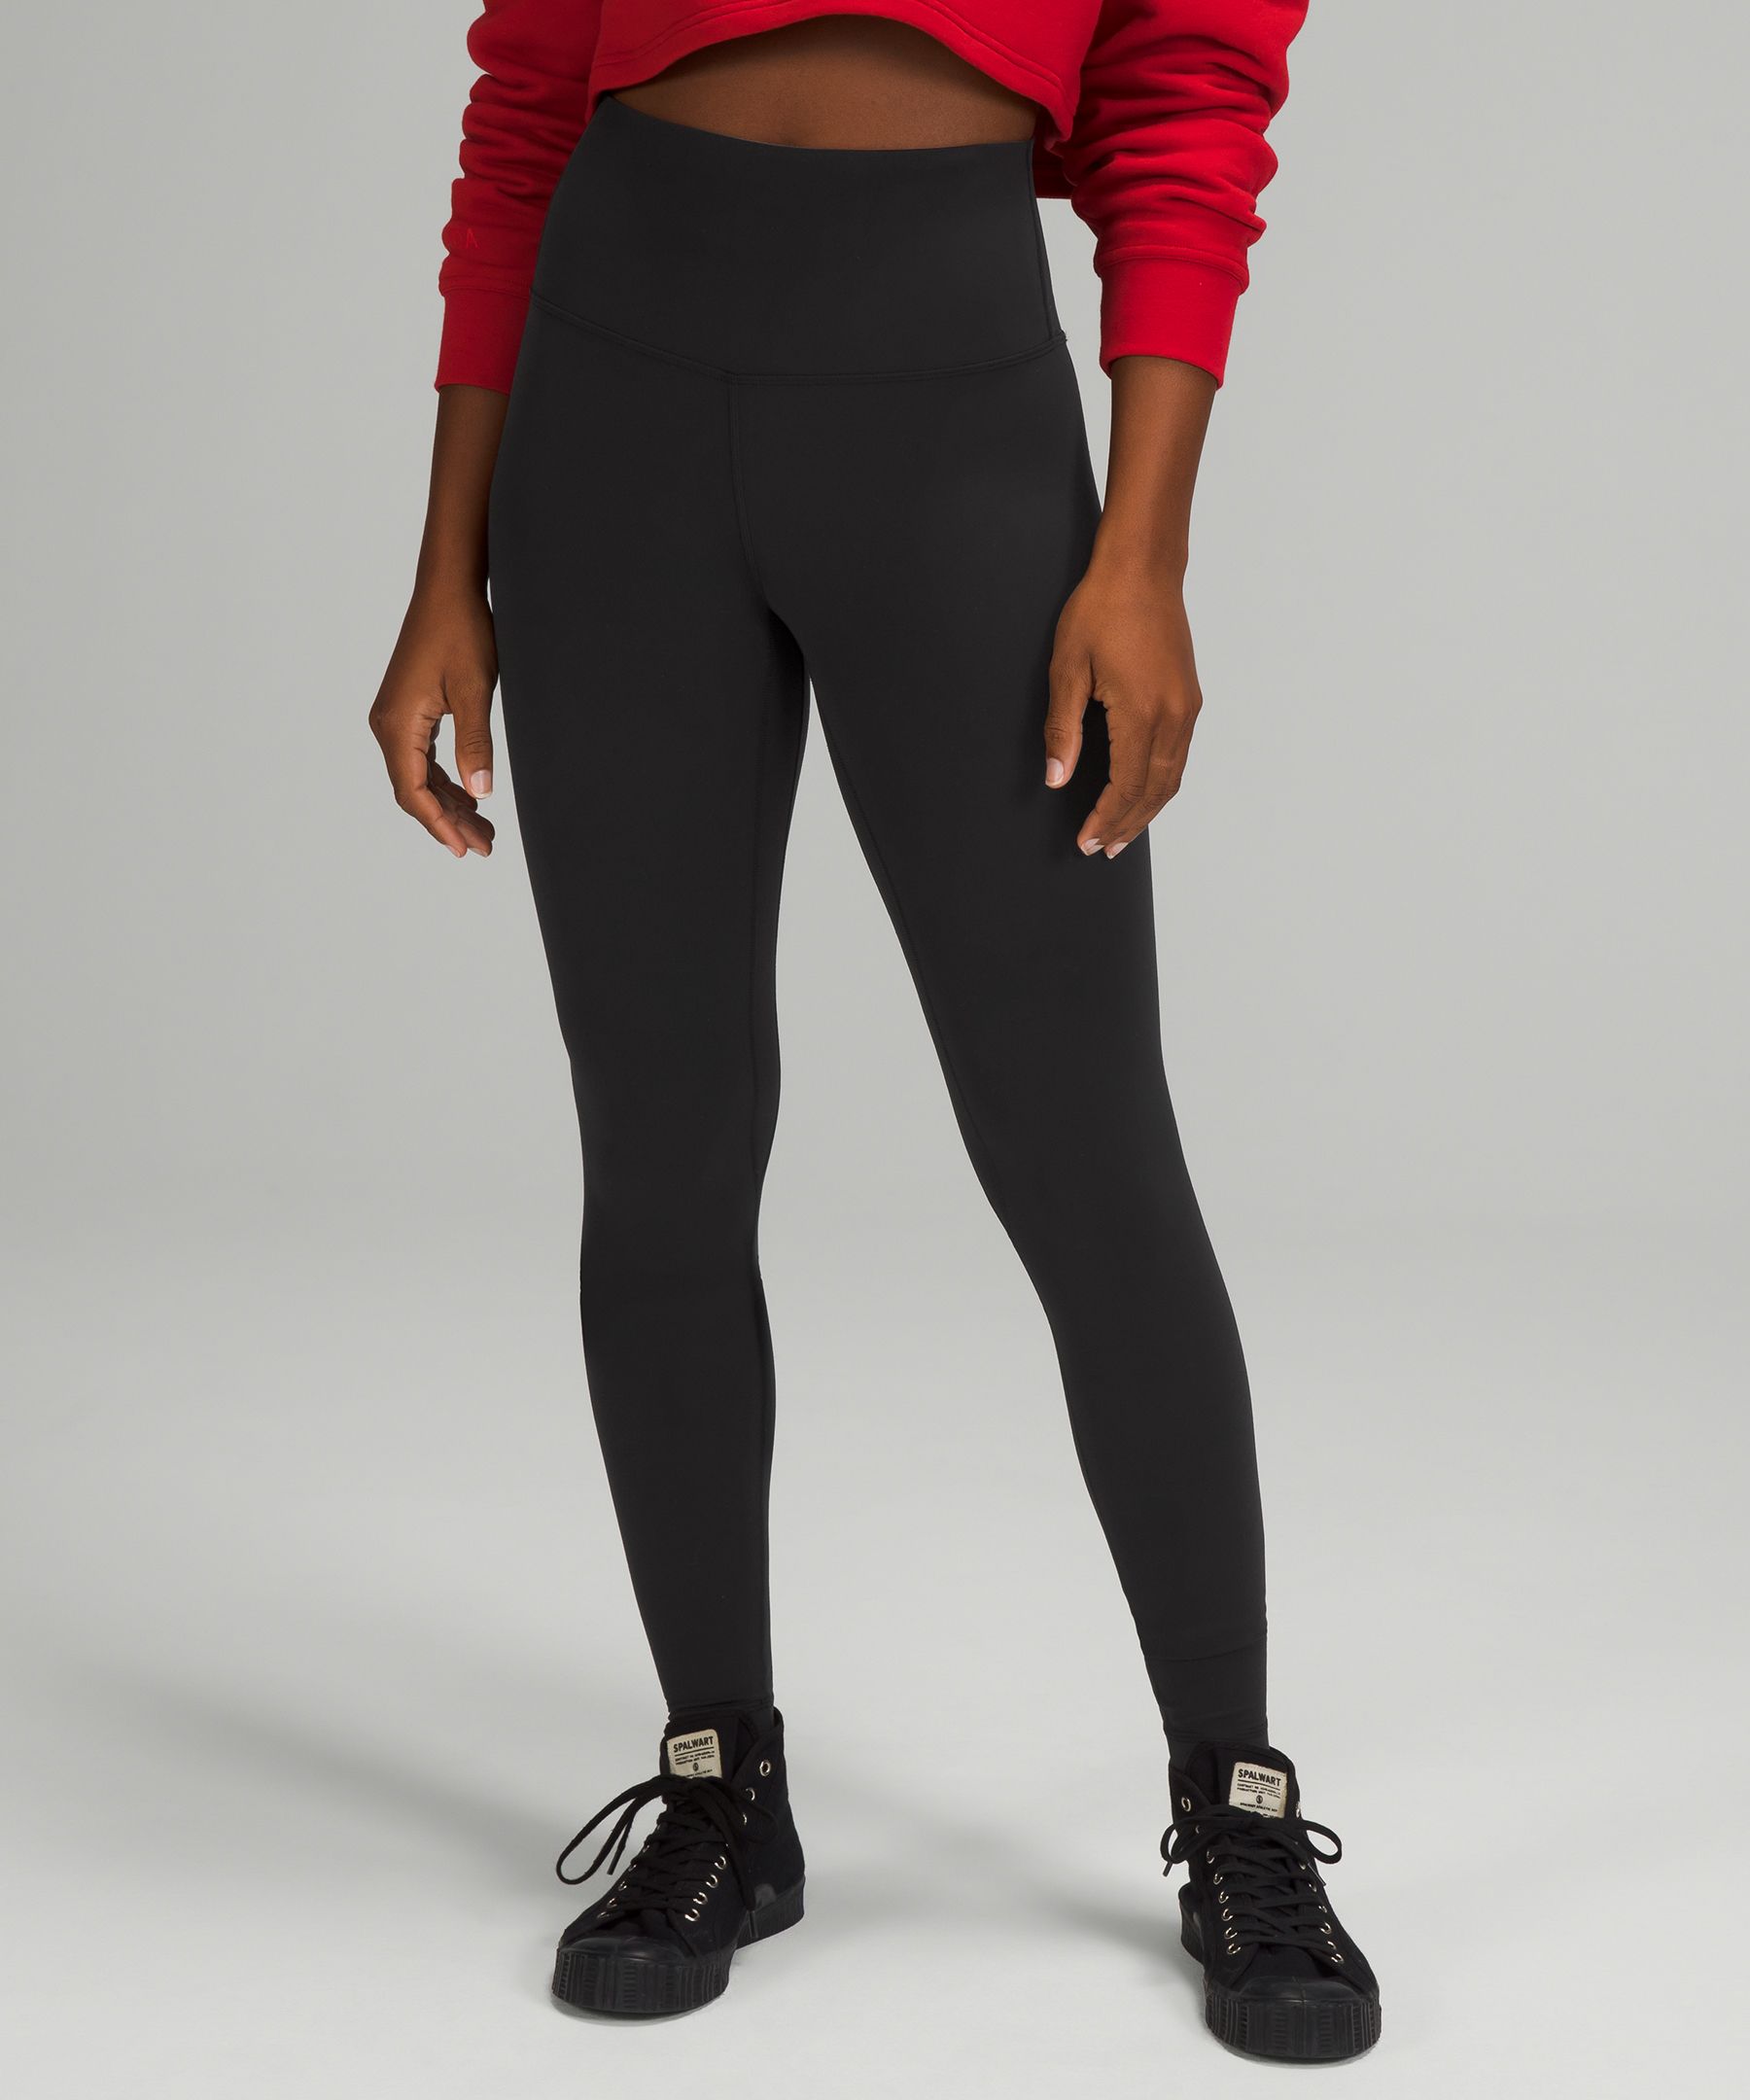 Team Canada lululemon Align™ High-Rise Pant 28 *COC Logo, Women's Leggings /Tights